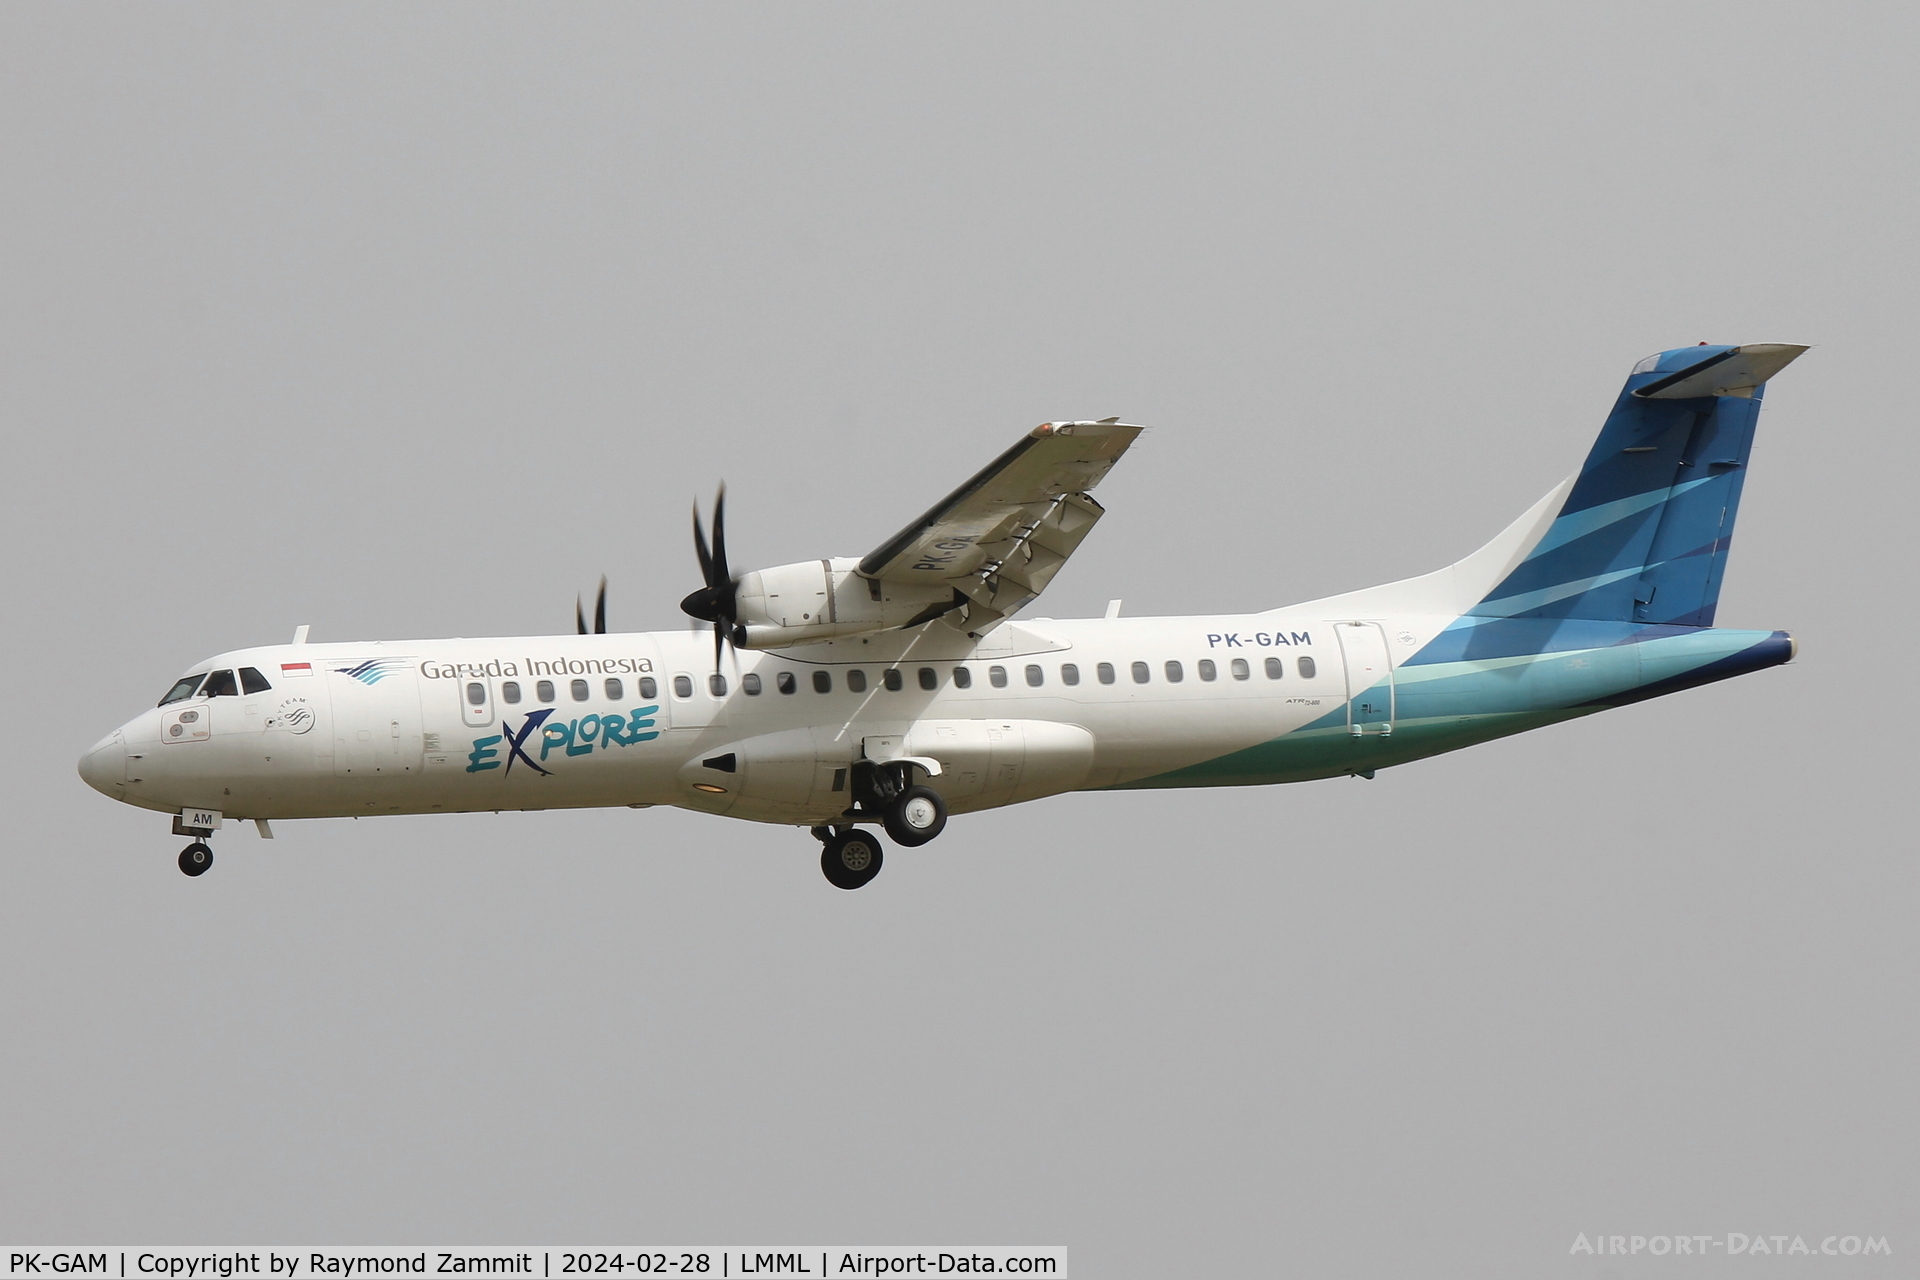 PK-GAM, 2015 ATR 72-600 (72-212A) C/N 1242, ATR-72 PK-GAM Garuda Indonesia (Air Explore)